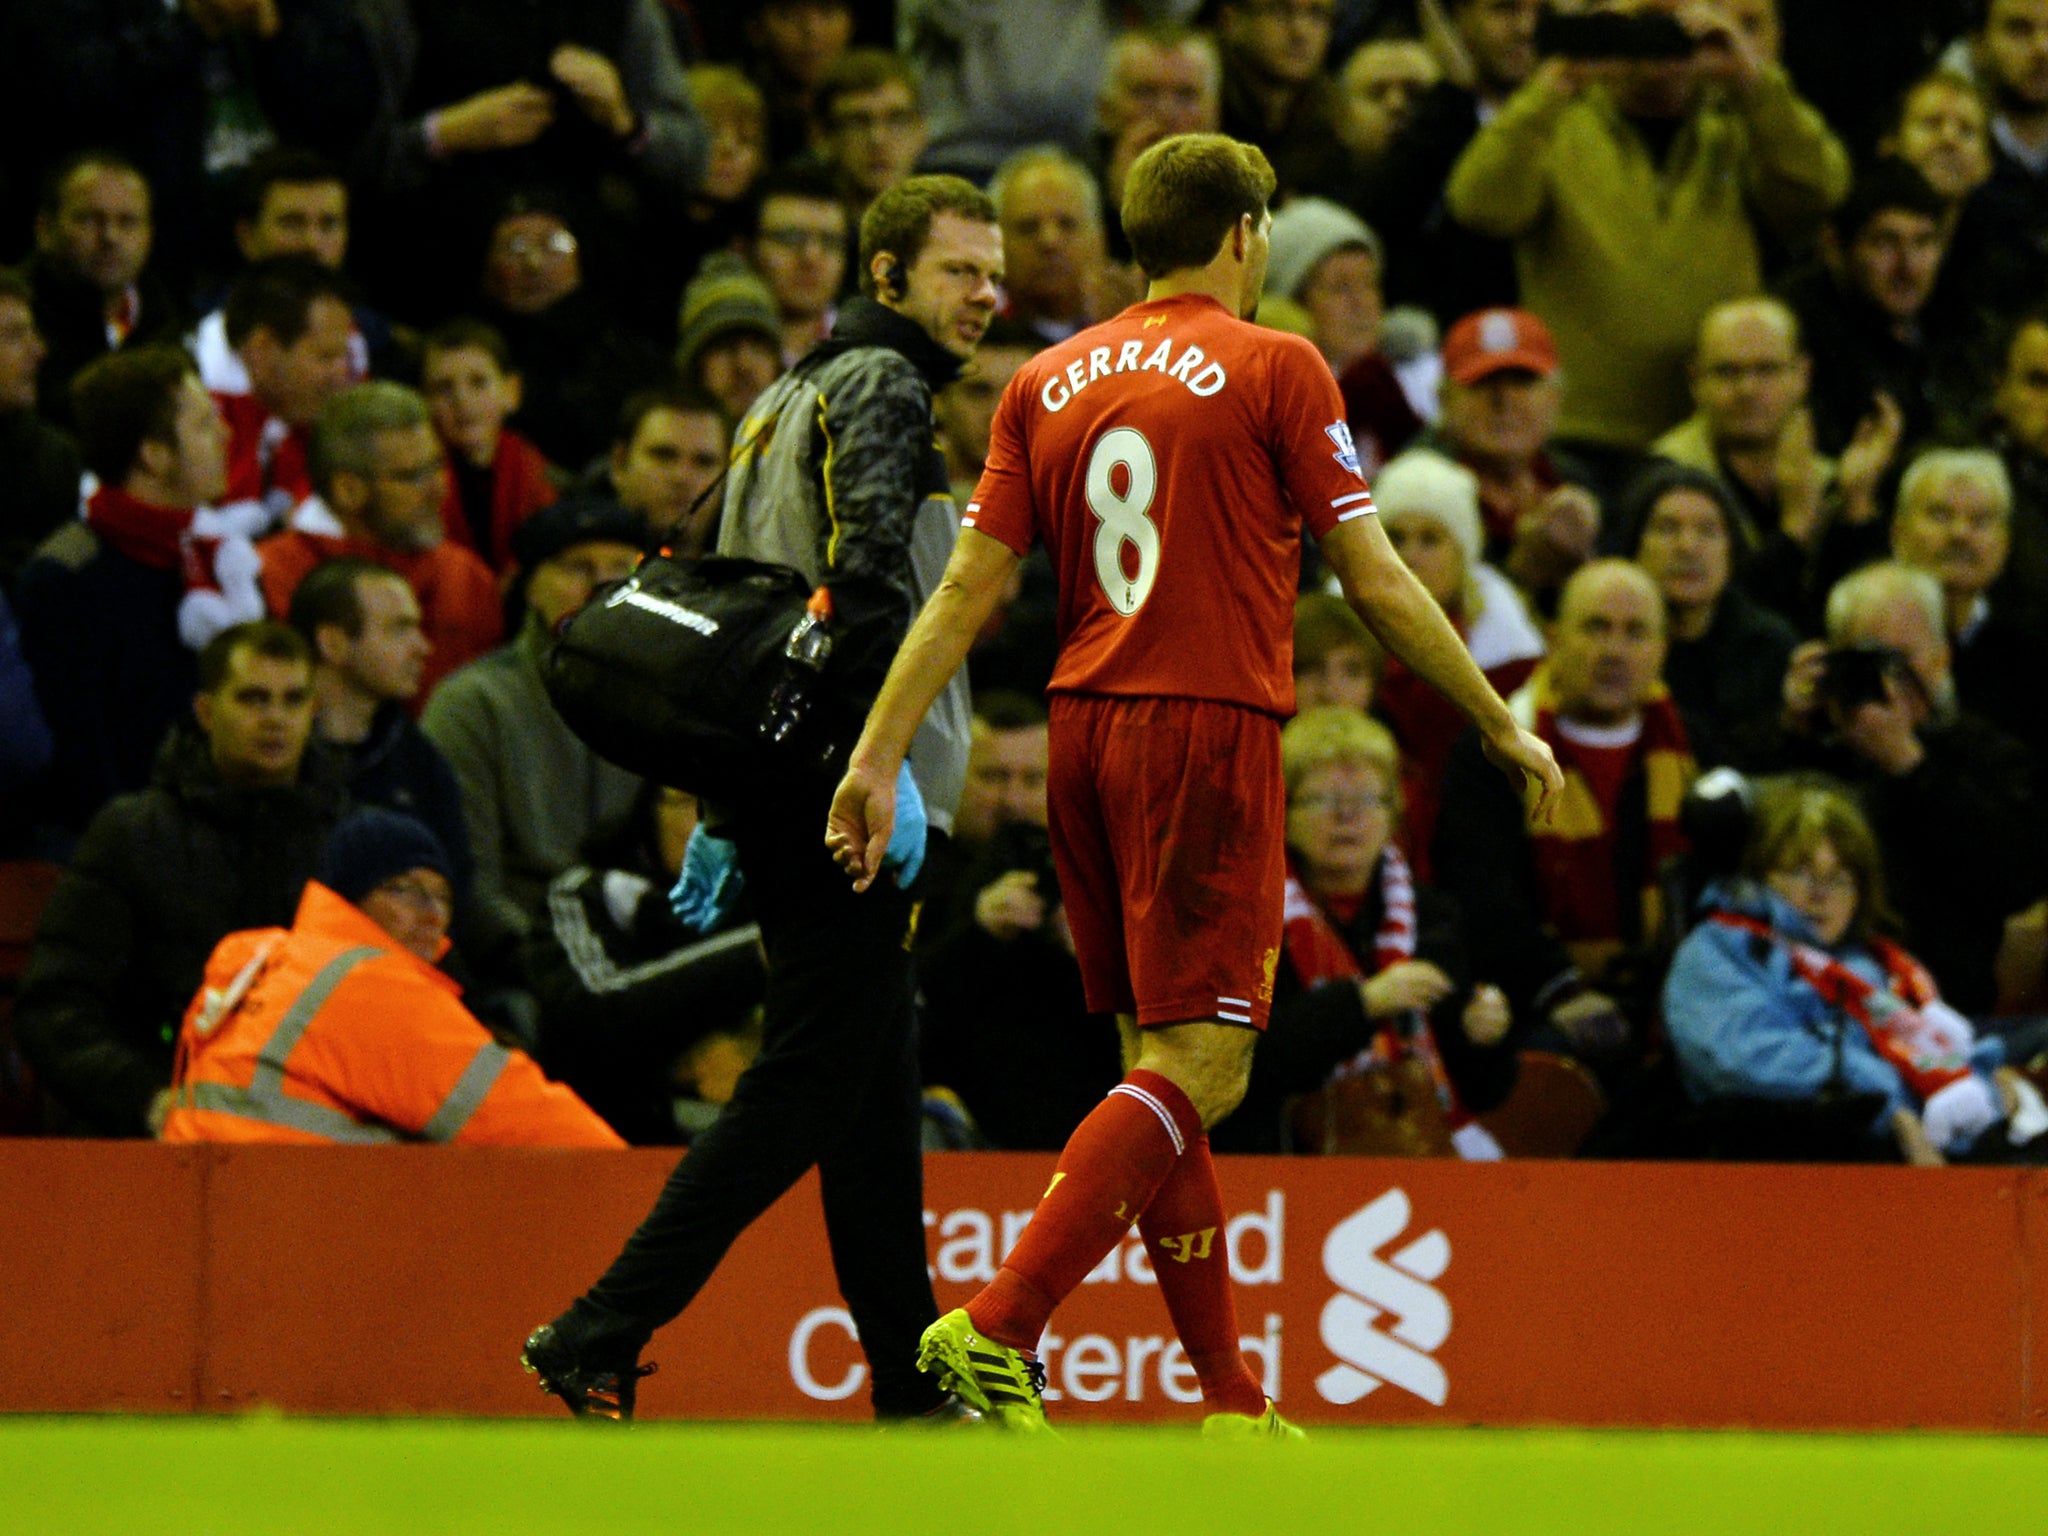 Liverpool captain Steven Gerrard limps off during the 4-1 victory over West Ham on 7 December